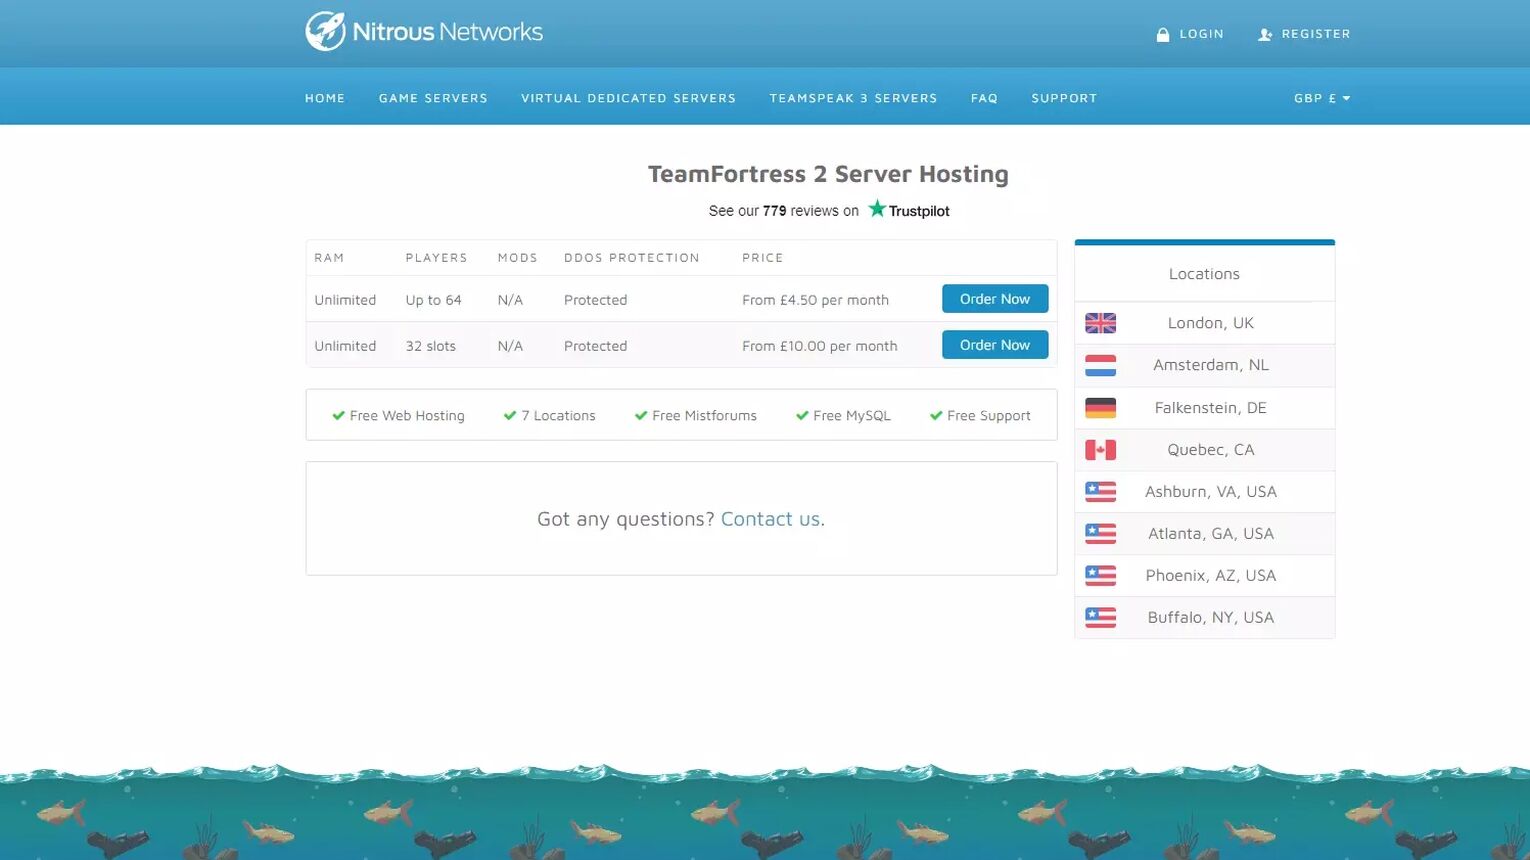 TF 2 - Nitrous Networks Hosting